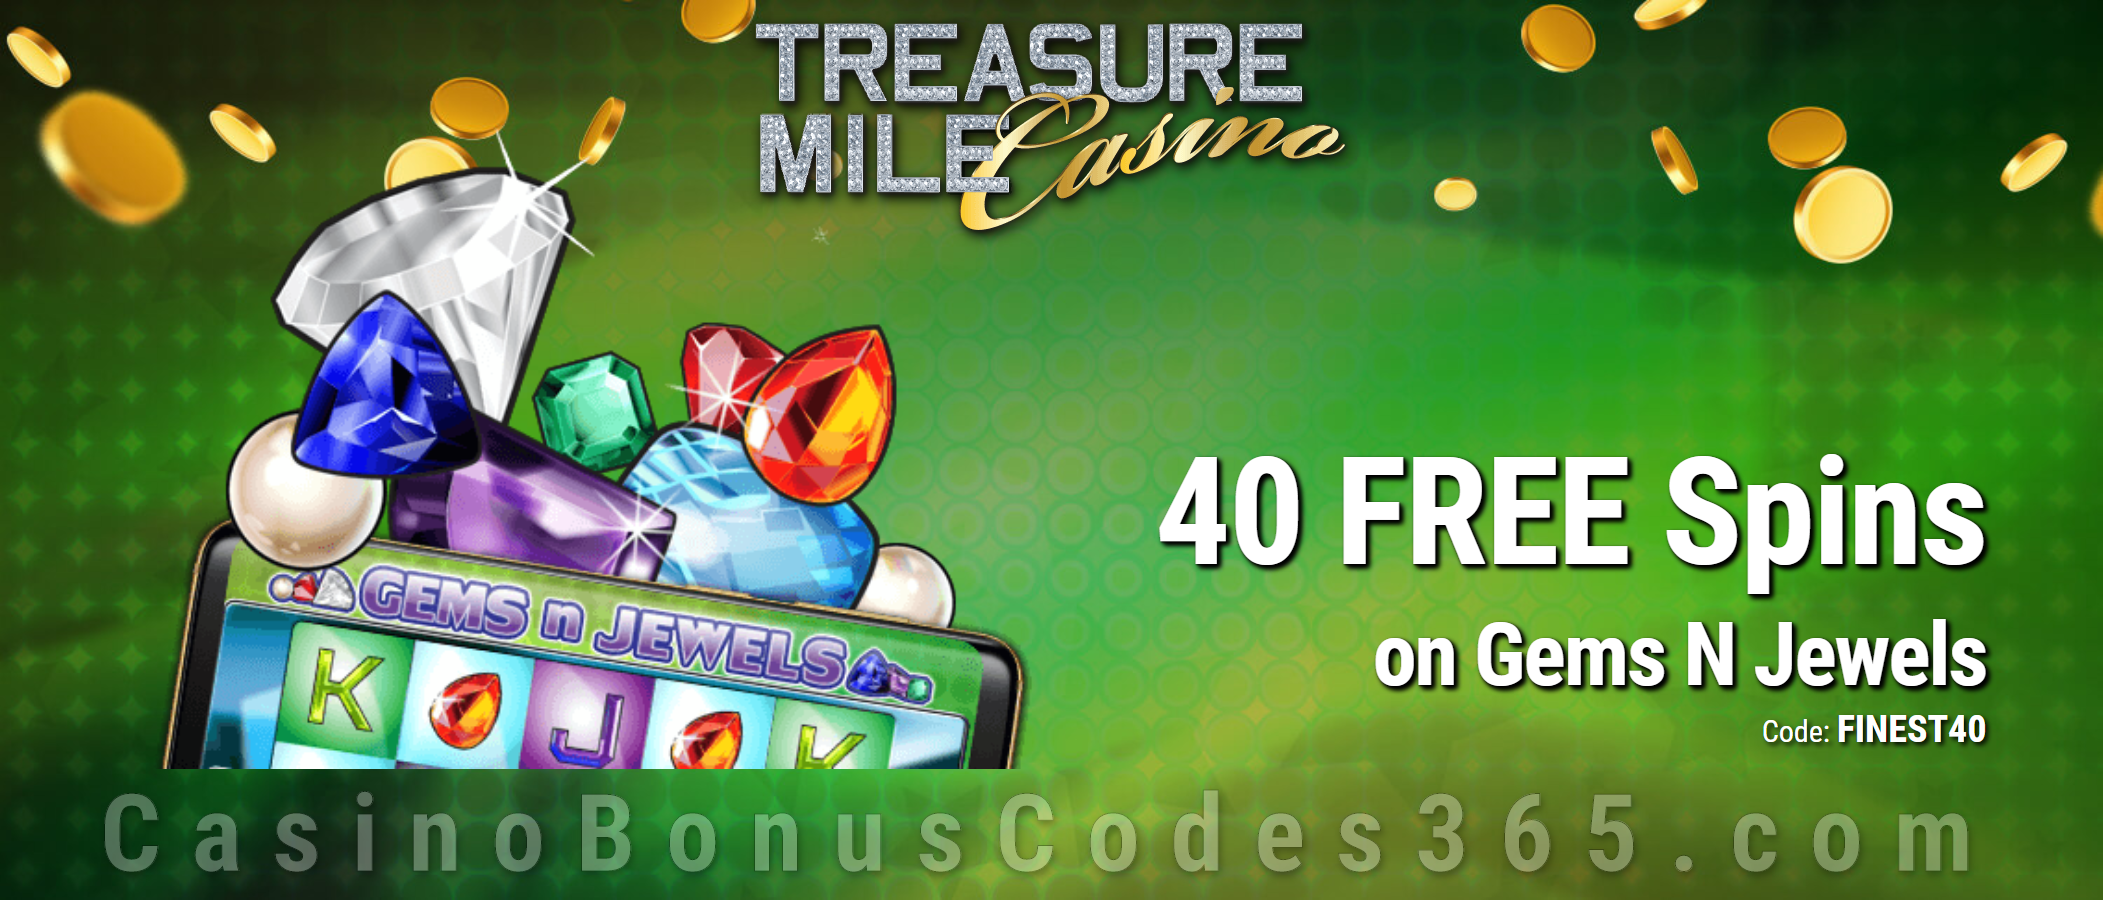 Treasure mile no deposit bonus codes 2020